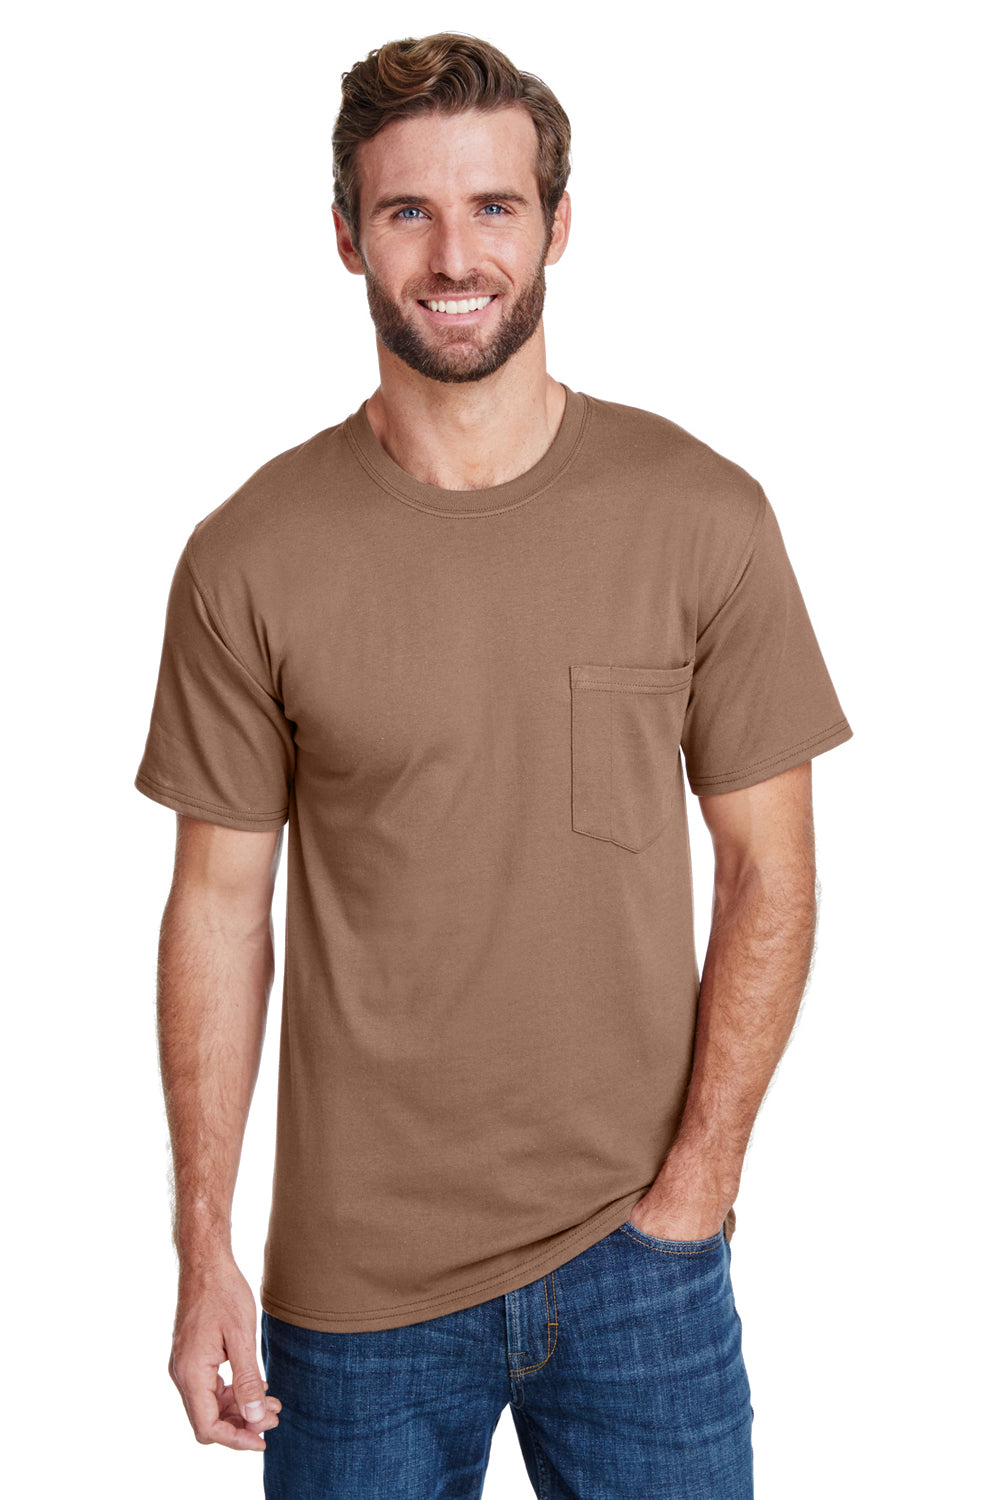 Hanes W110 Mens Workwear Short Sleeve Crewneck T-Shirt w/ Pocket Army Brown Front